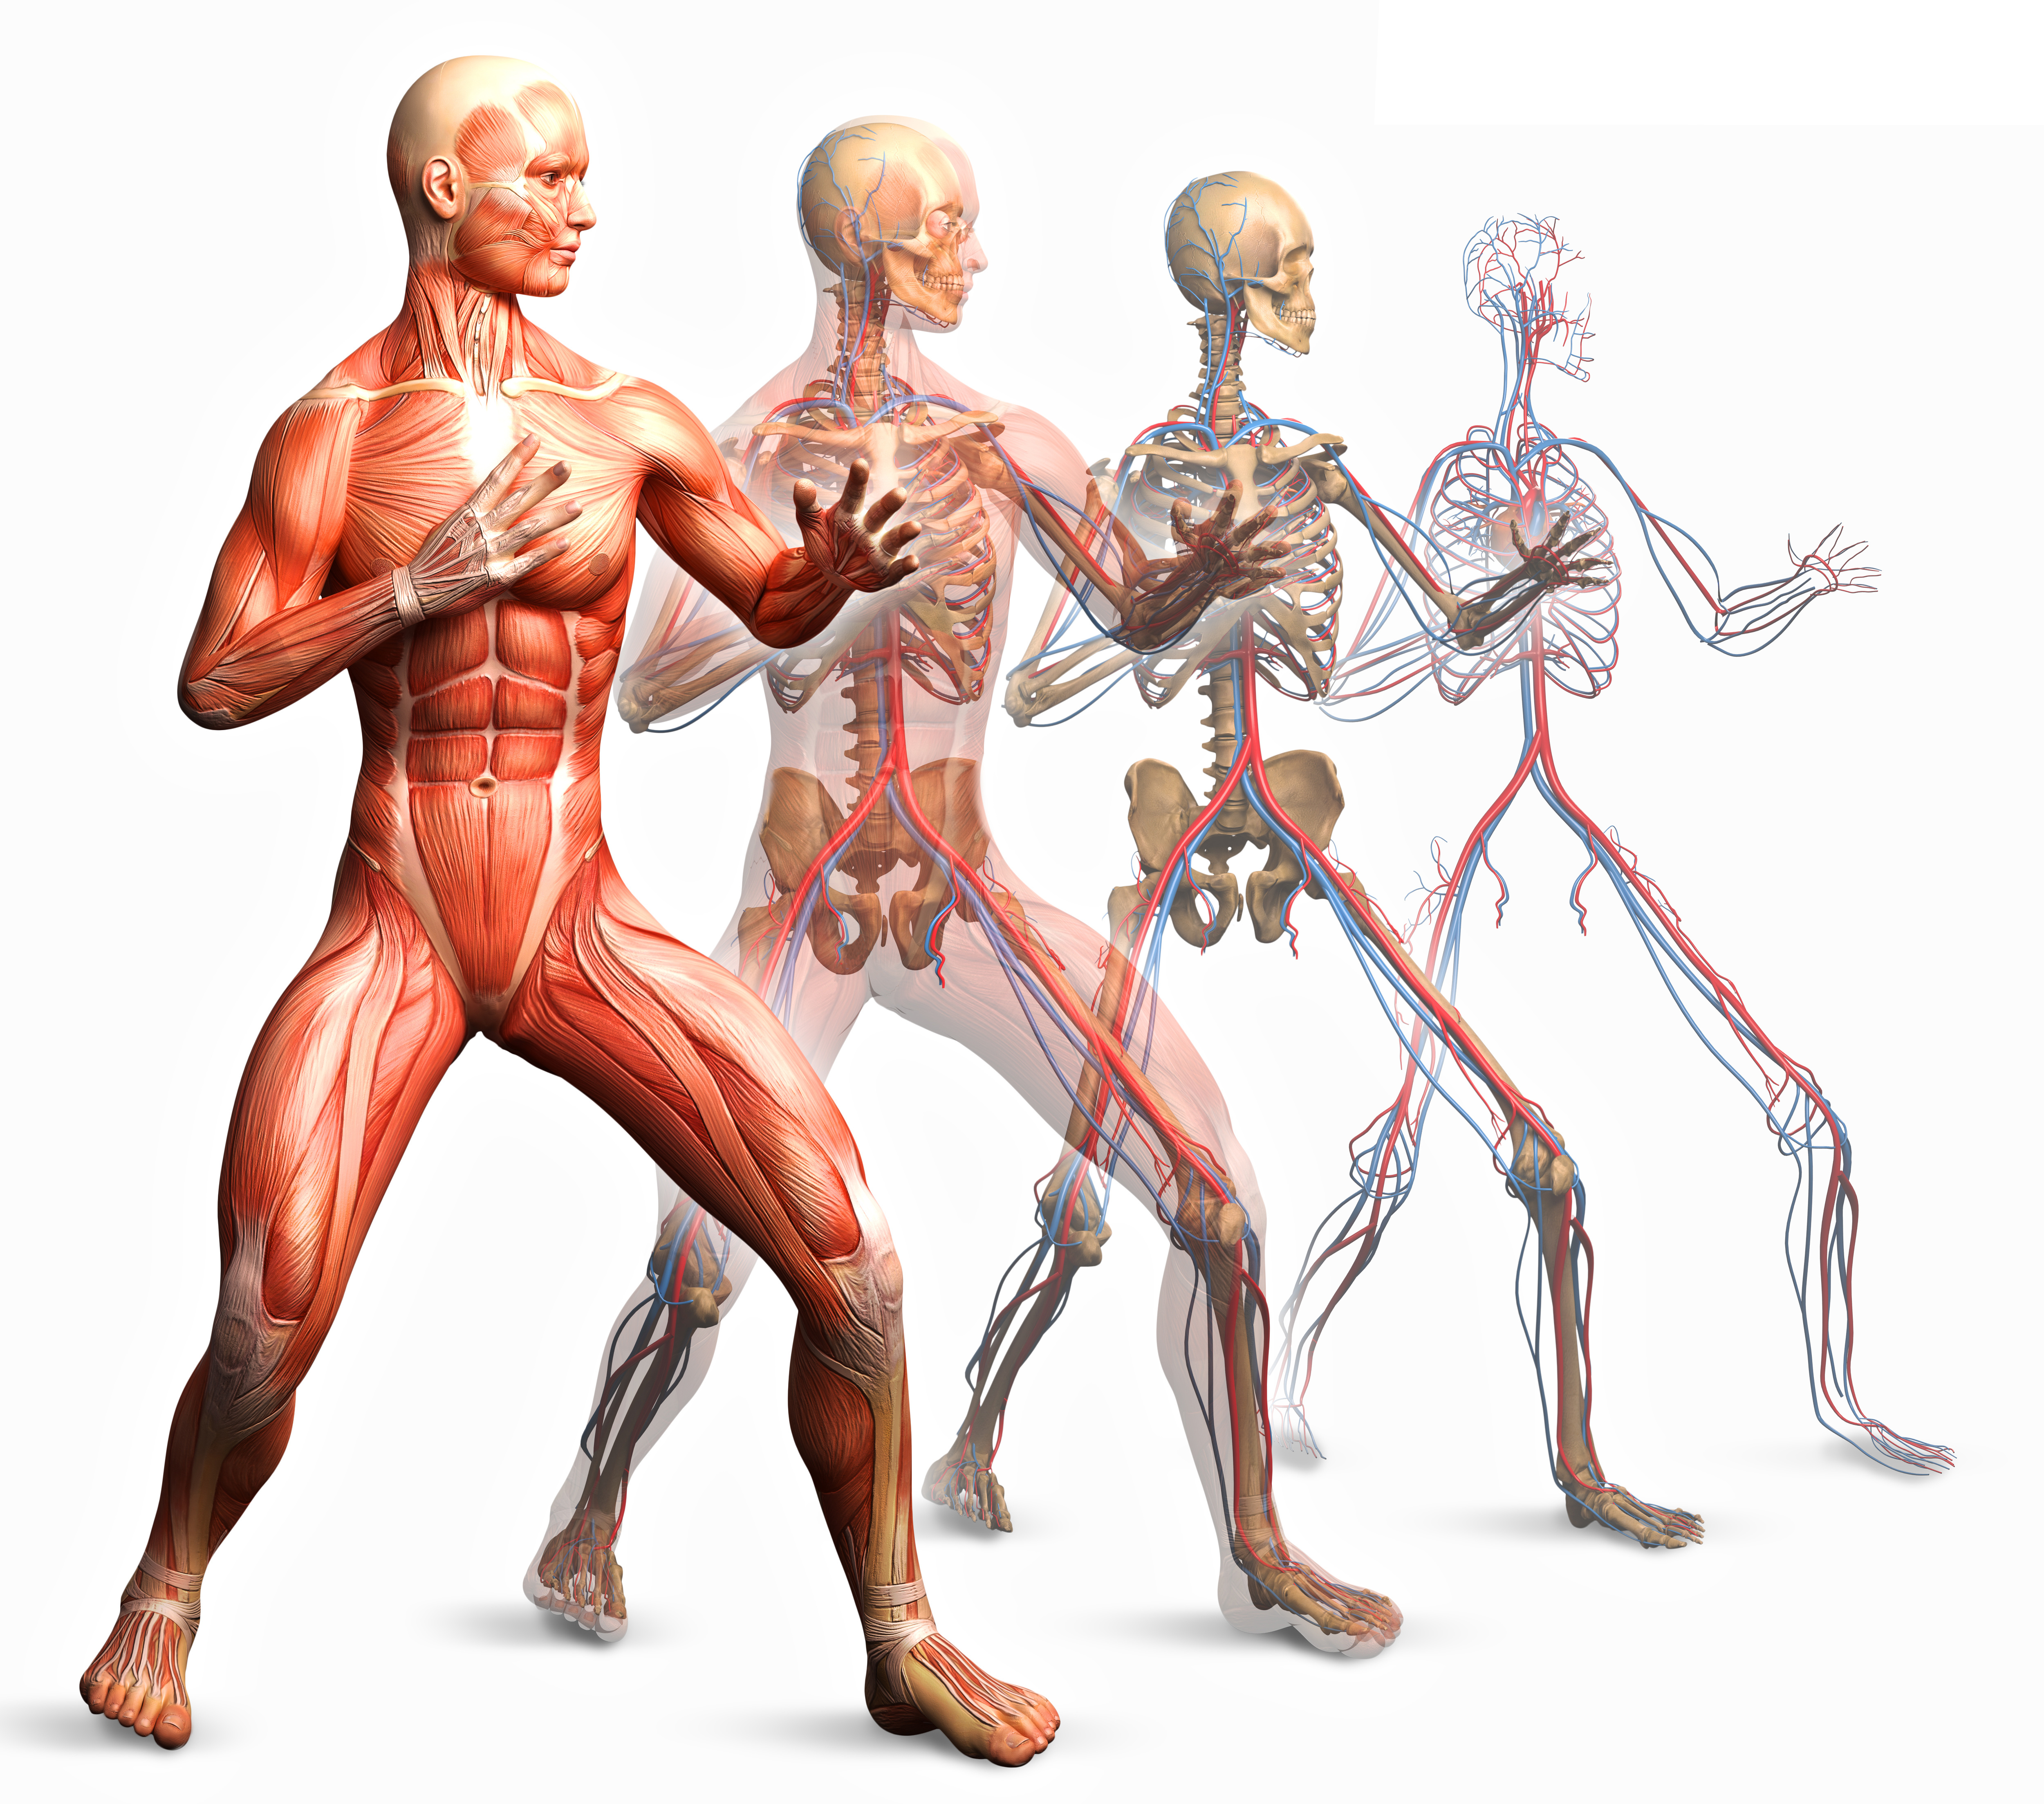 Human h. Анатомия человека. Мышцы человека. Мышечный скелет. Костно мышечный аппарат человека.